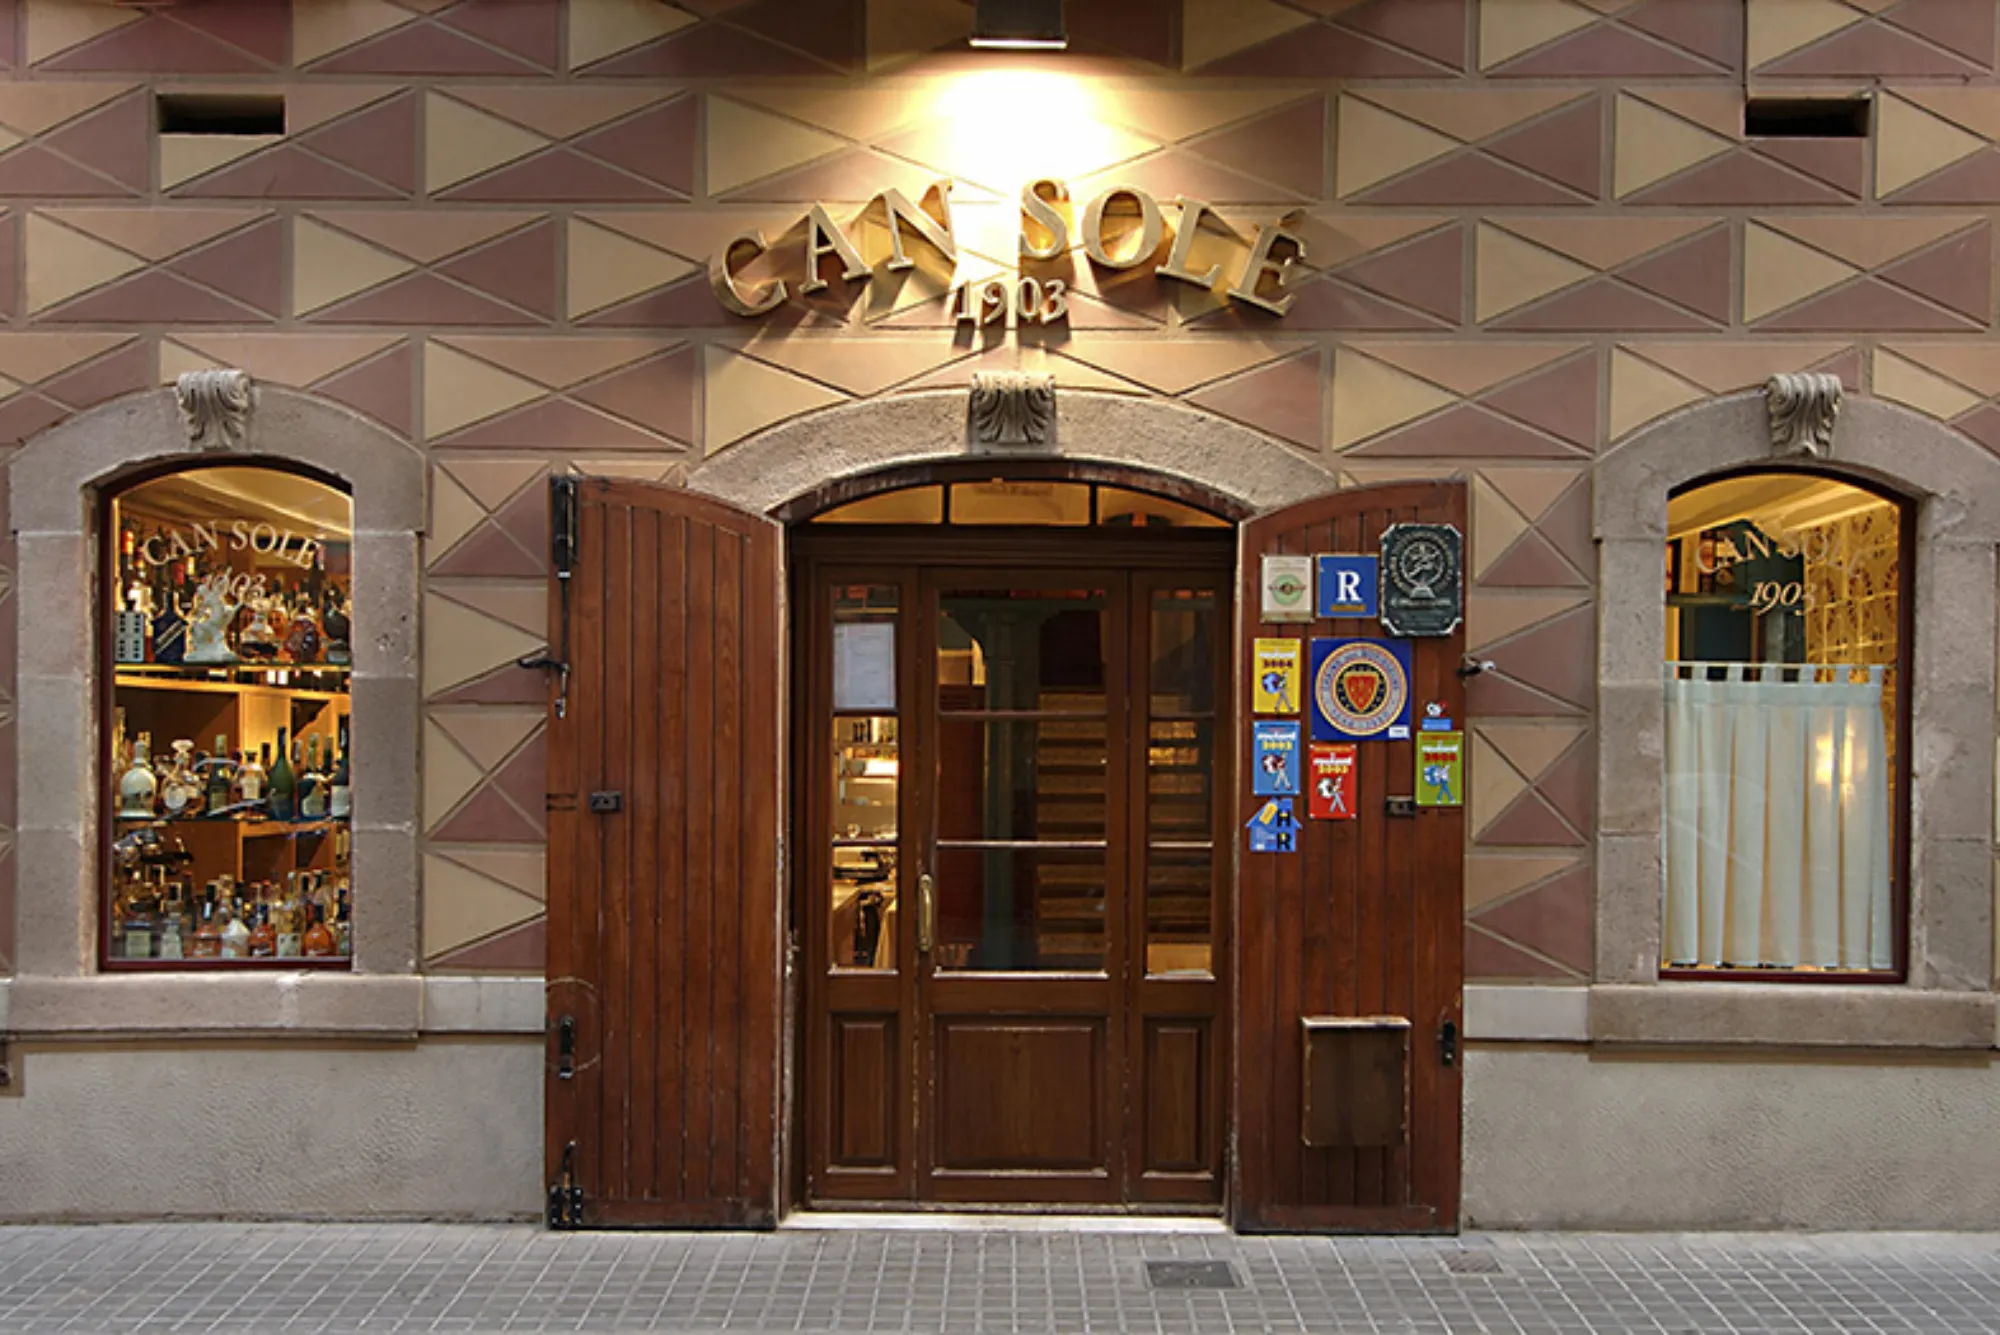 Can Sole Barcelona Restaurant